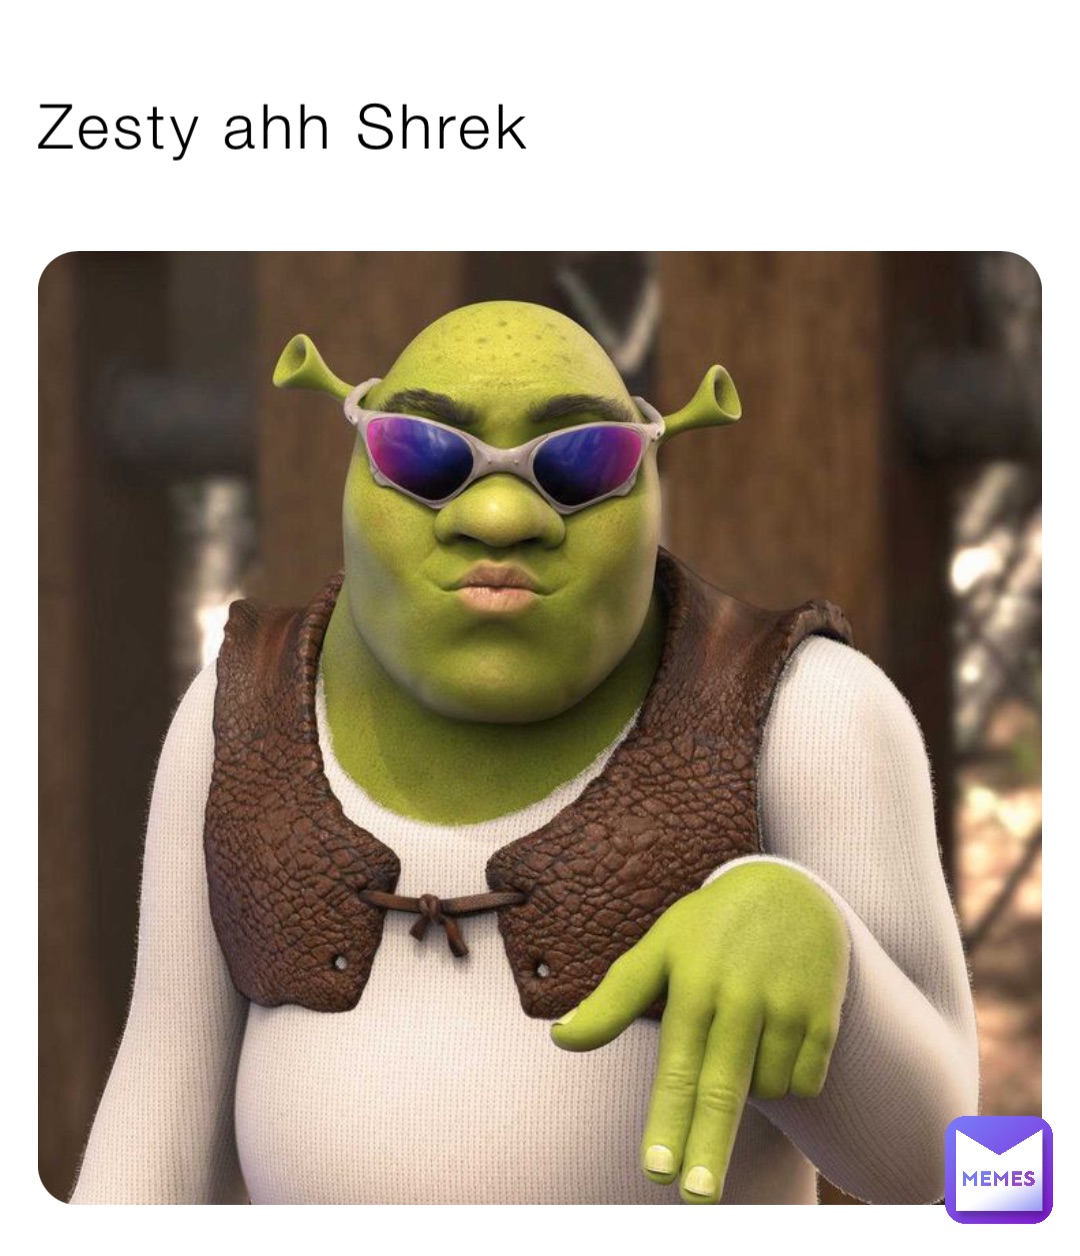 Zesty ahh Shrek